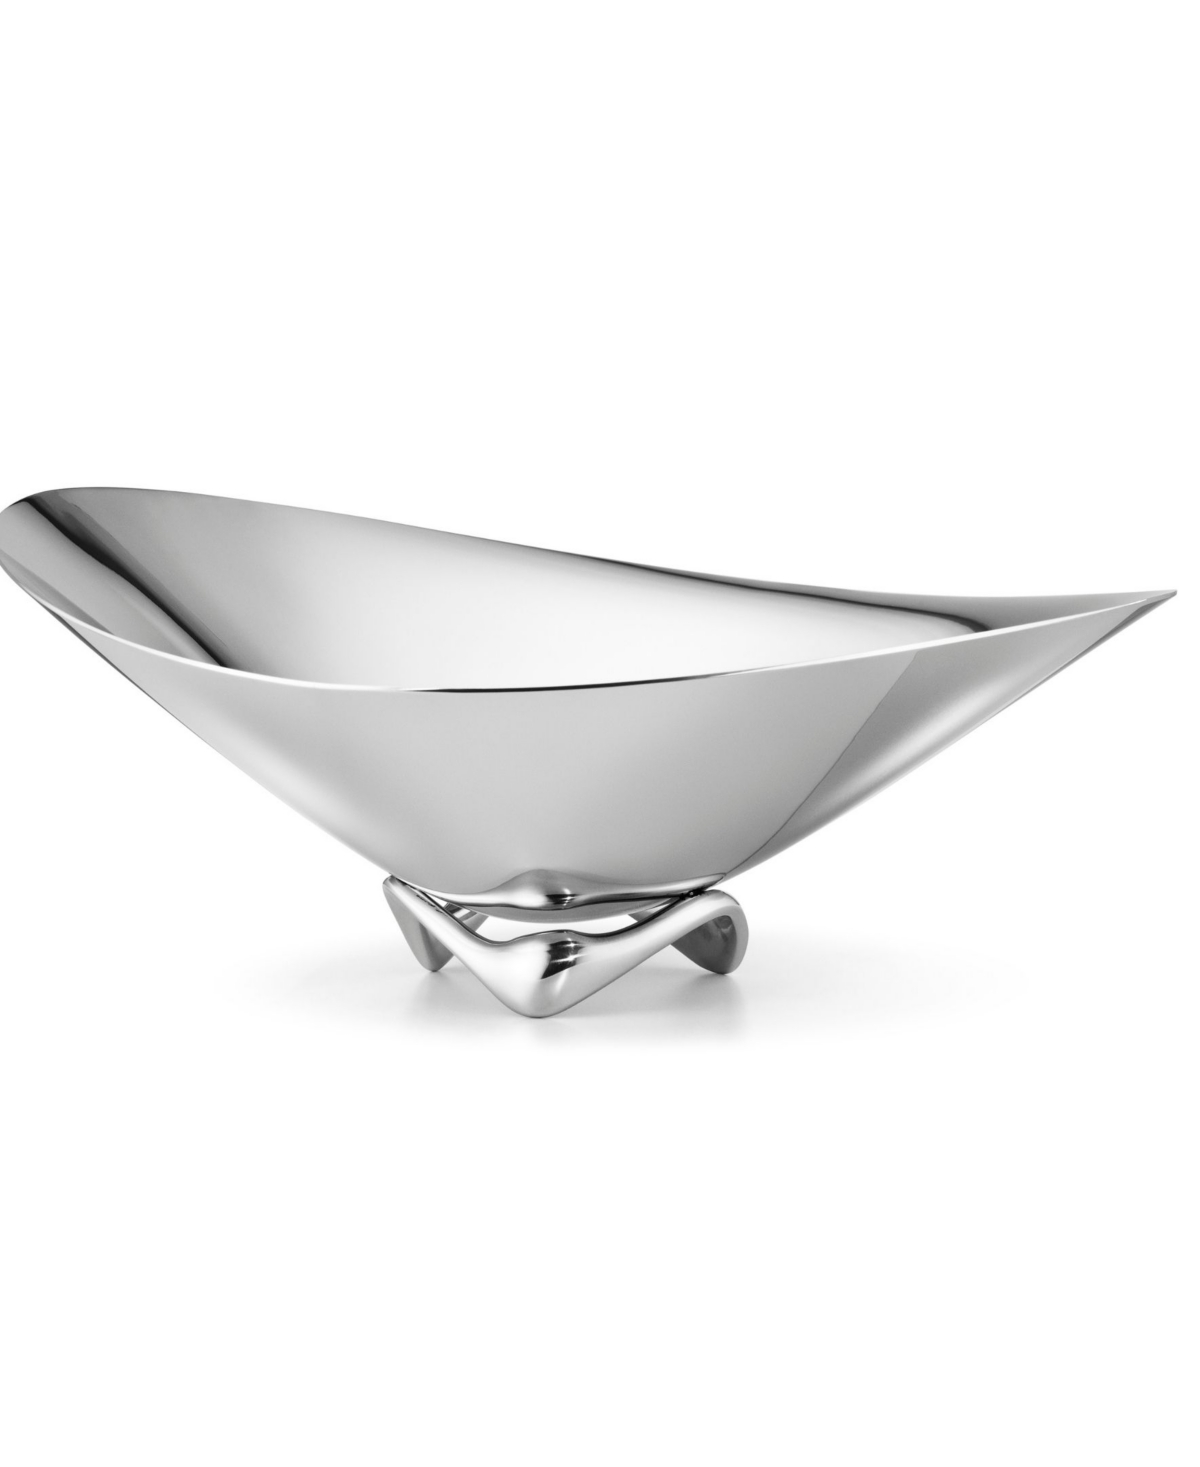 Hk Wave Bowl, Large - Silver